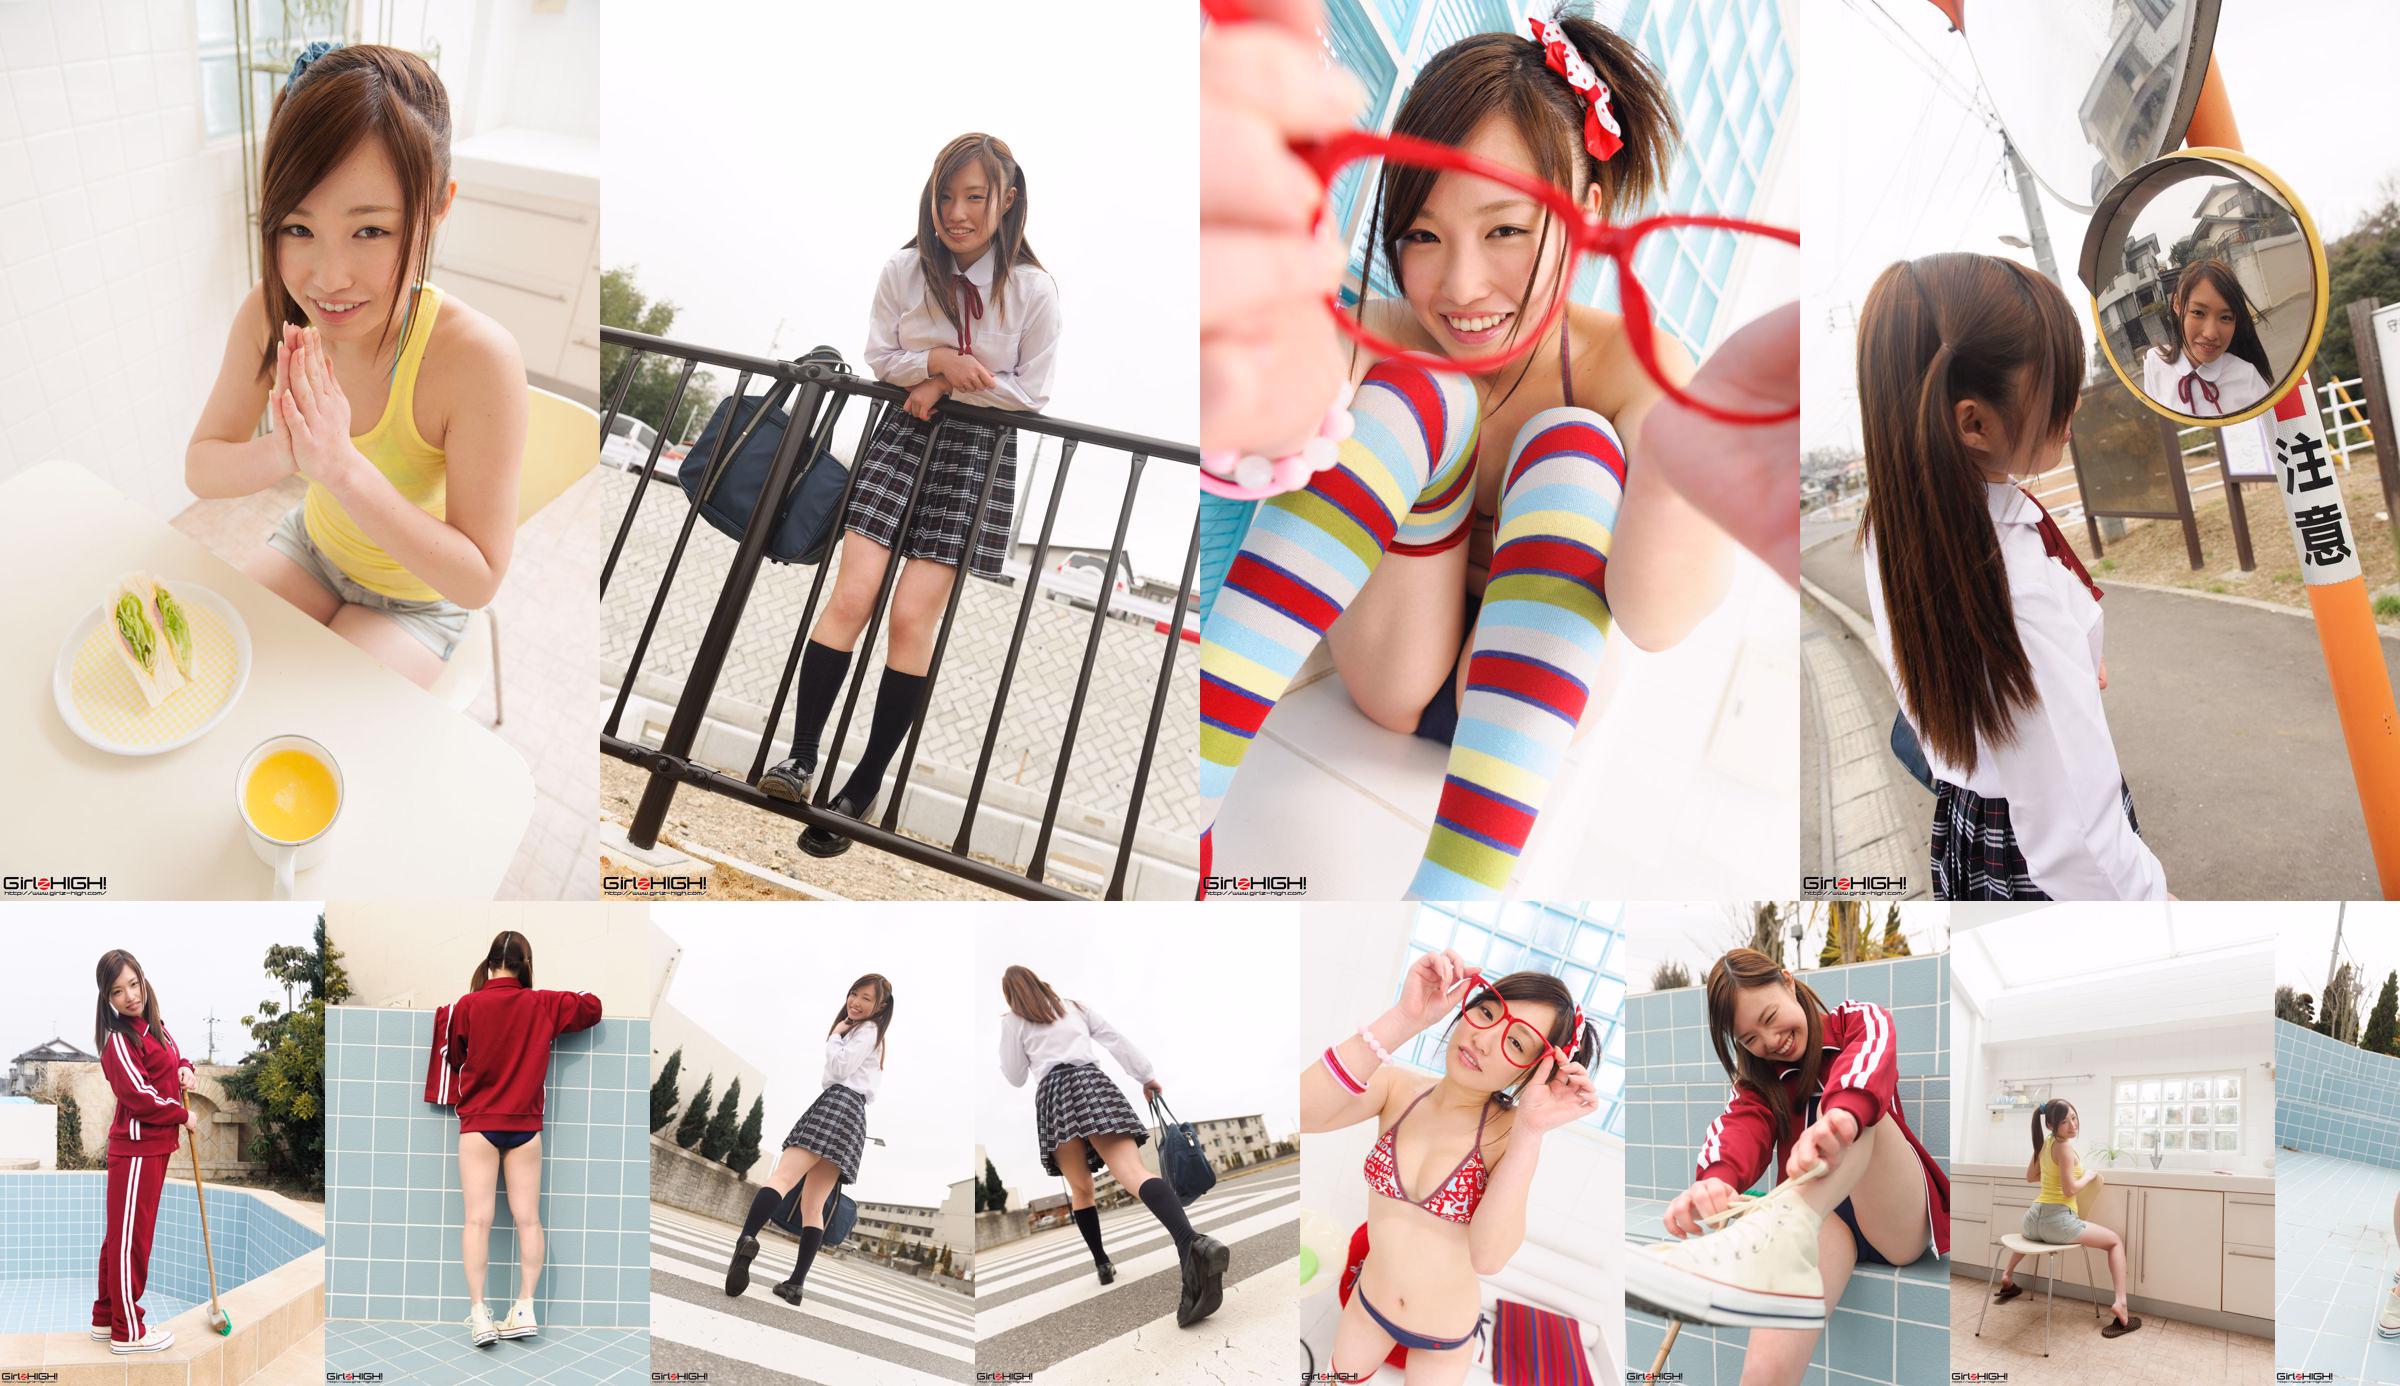 [Girlz-High] Yuno Natsuki Yuno Natsuki / Yuno Natsuki's Gravure Gallery --g023 Photoset 02 No.88e09d Pagina 1